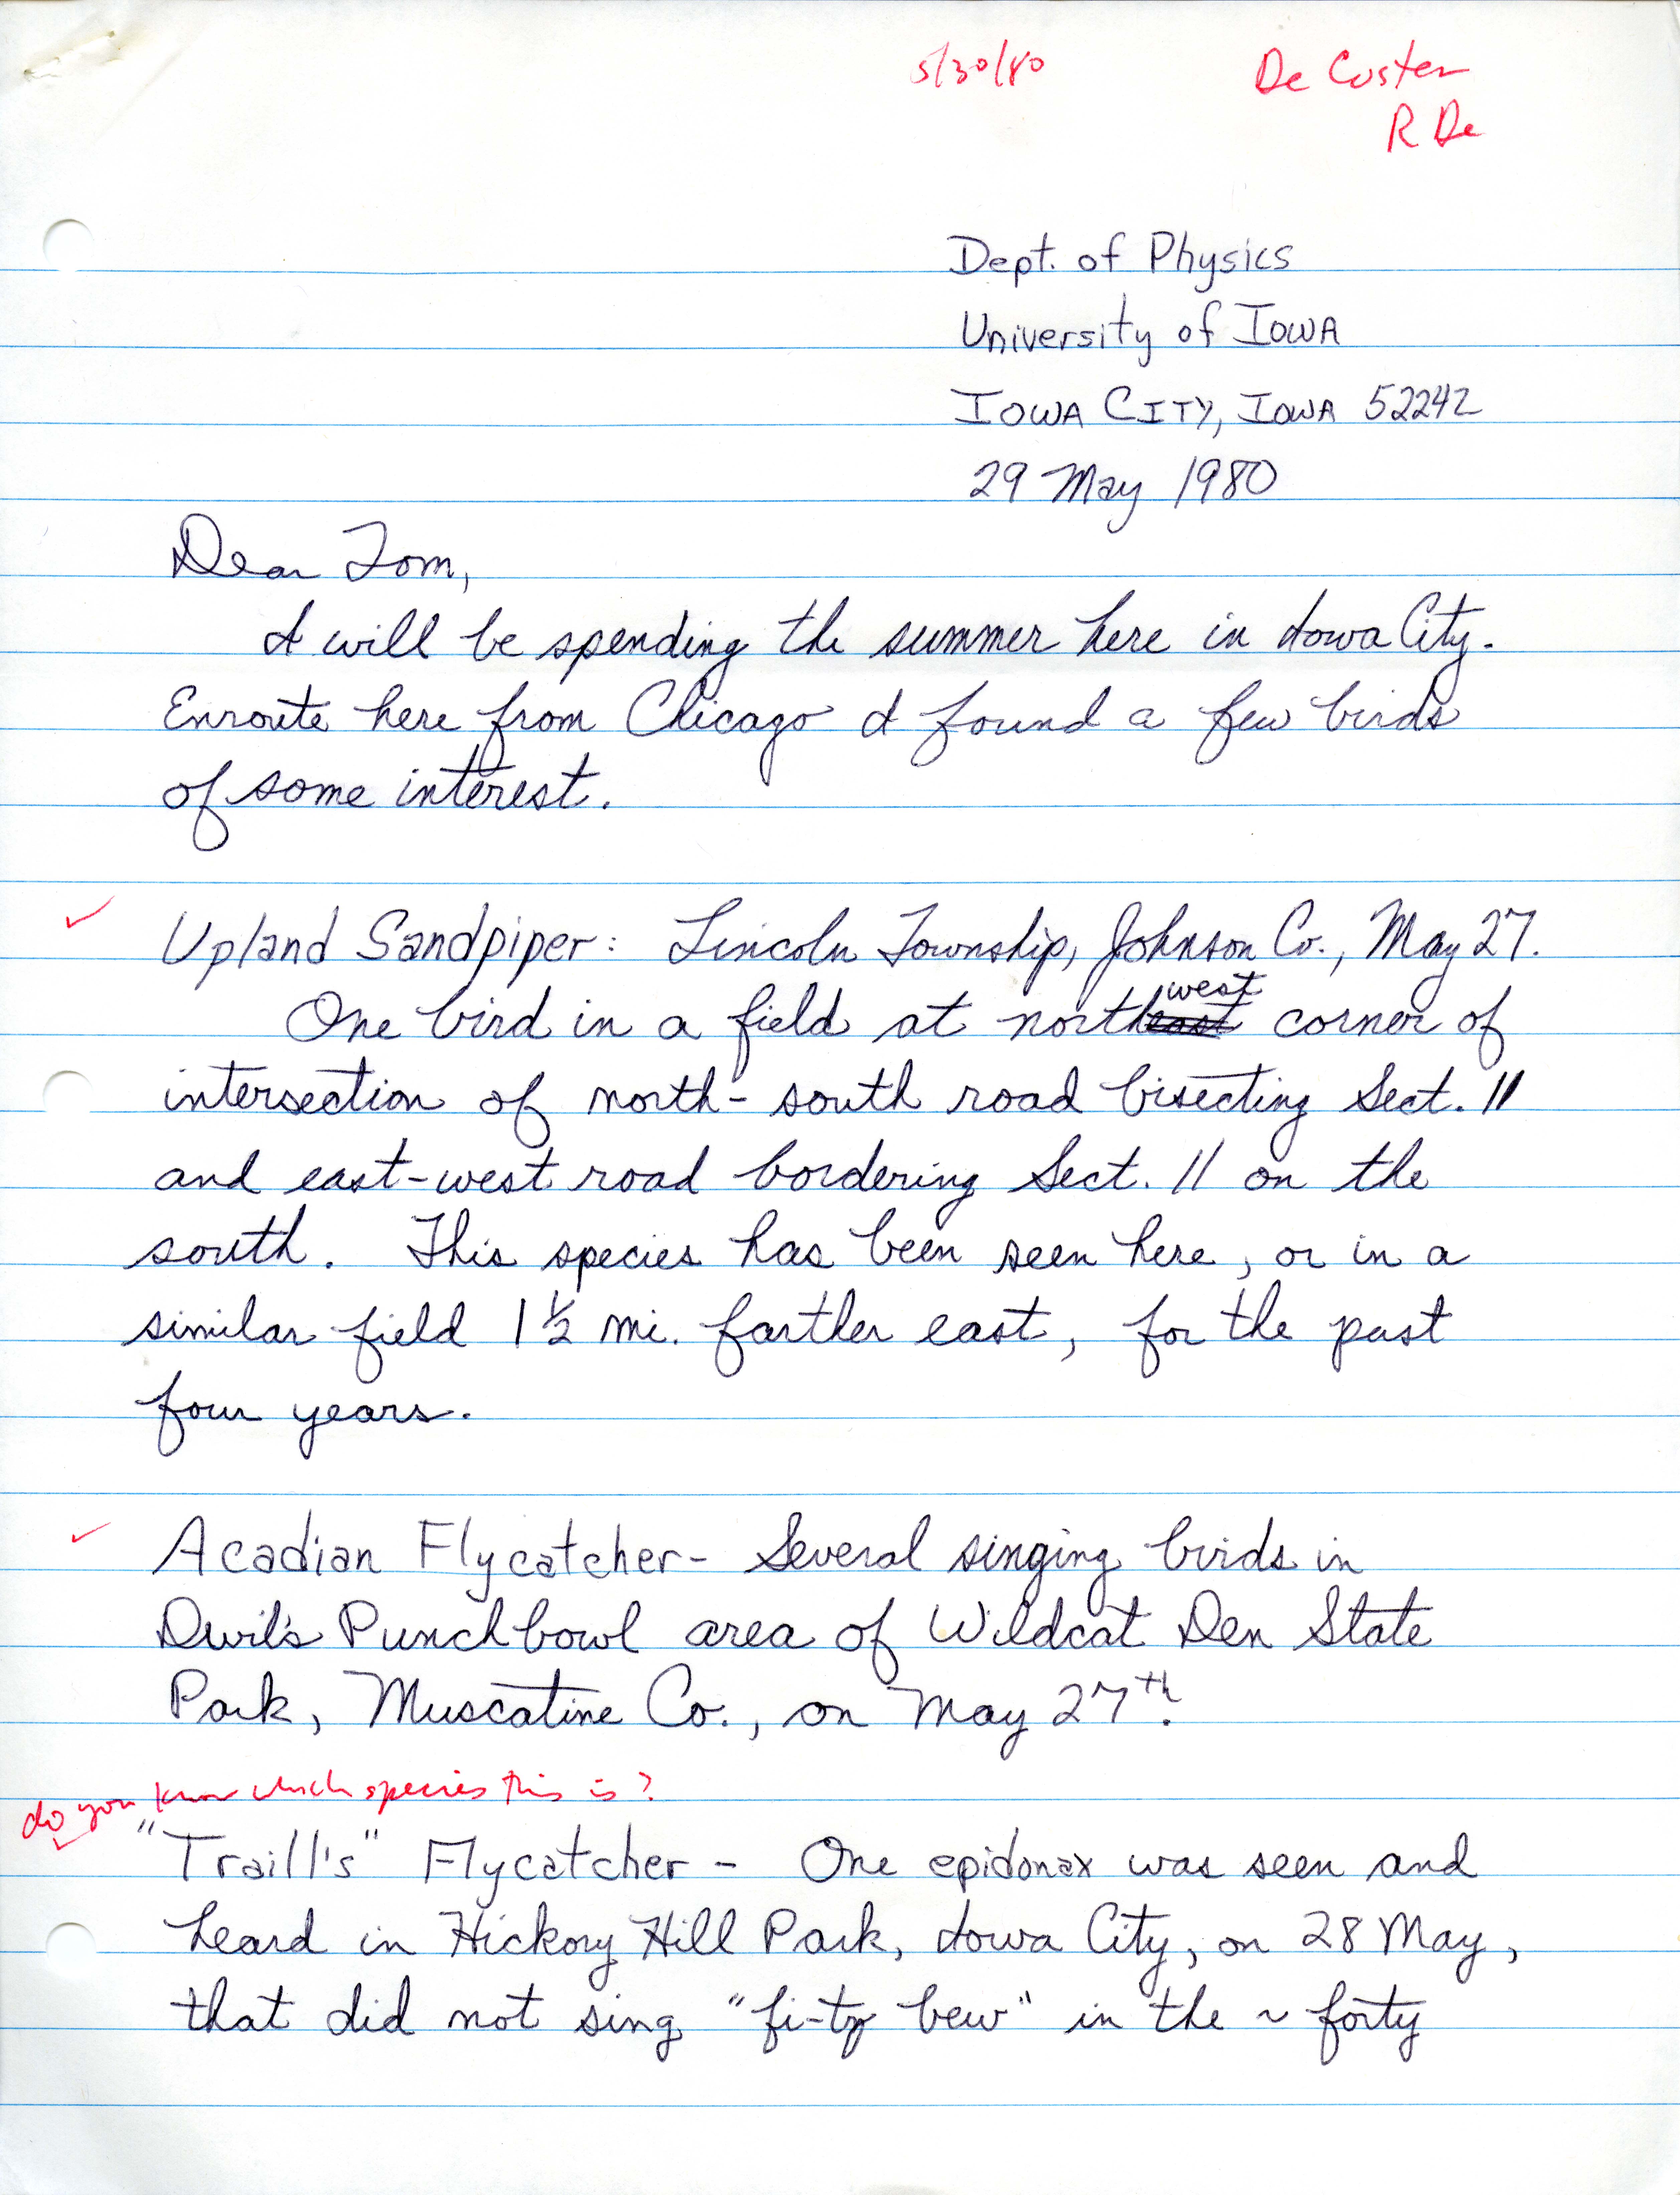 Rich DeCoster letter to Thomas H. Kent regarding bird sightings, May 29, 1980